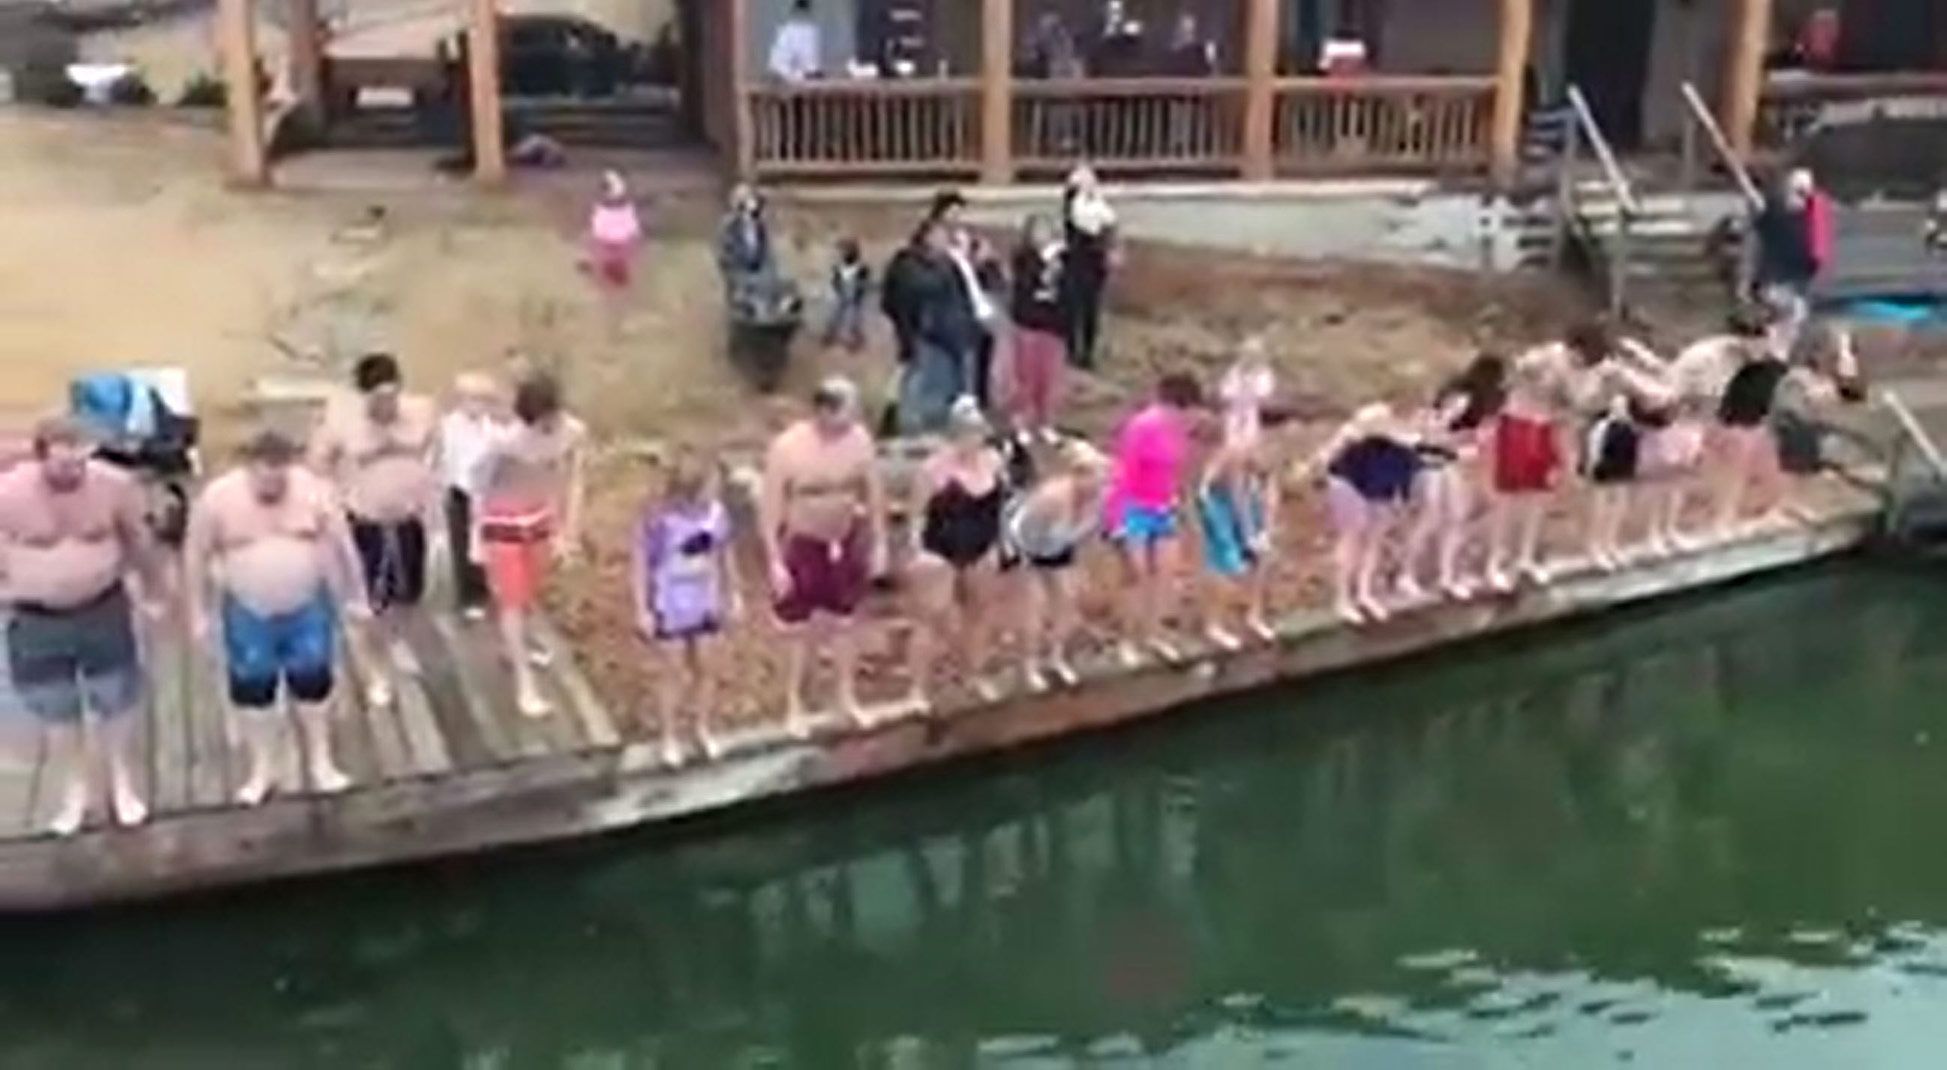 Twenty people lined up to jump into Garner Lake